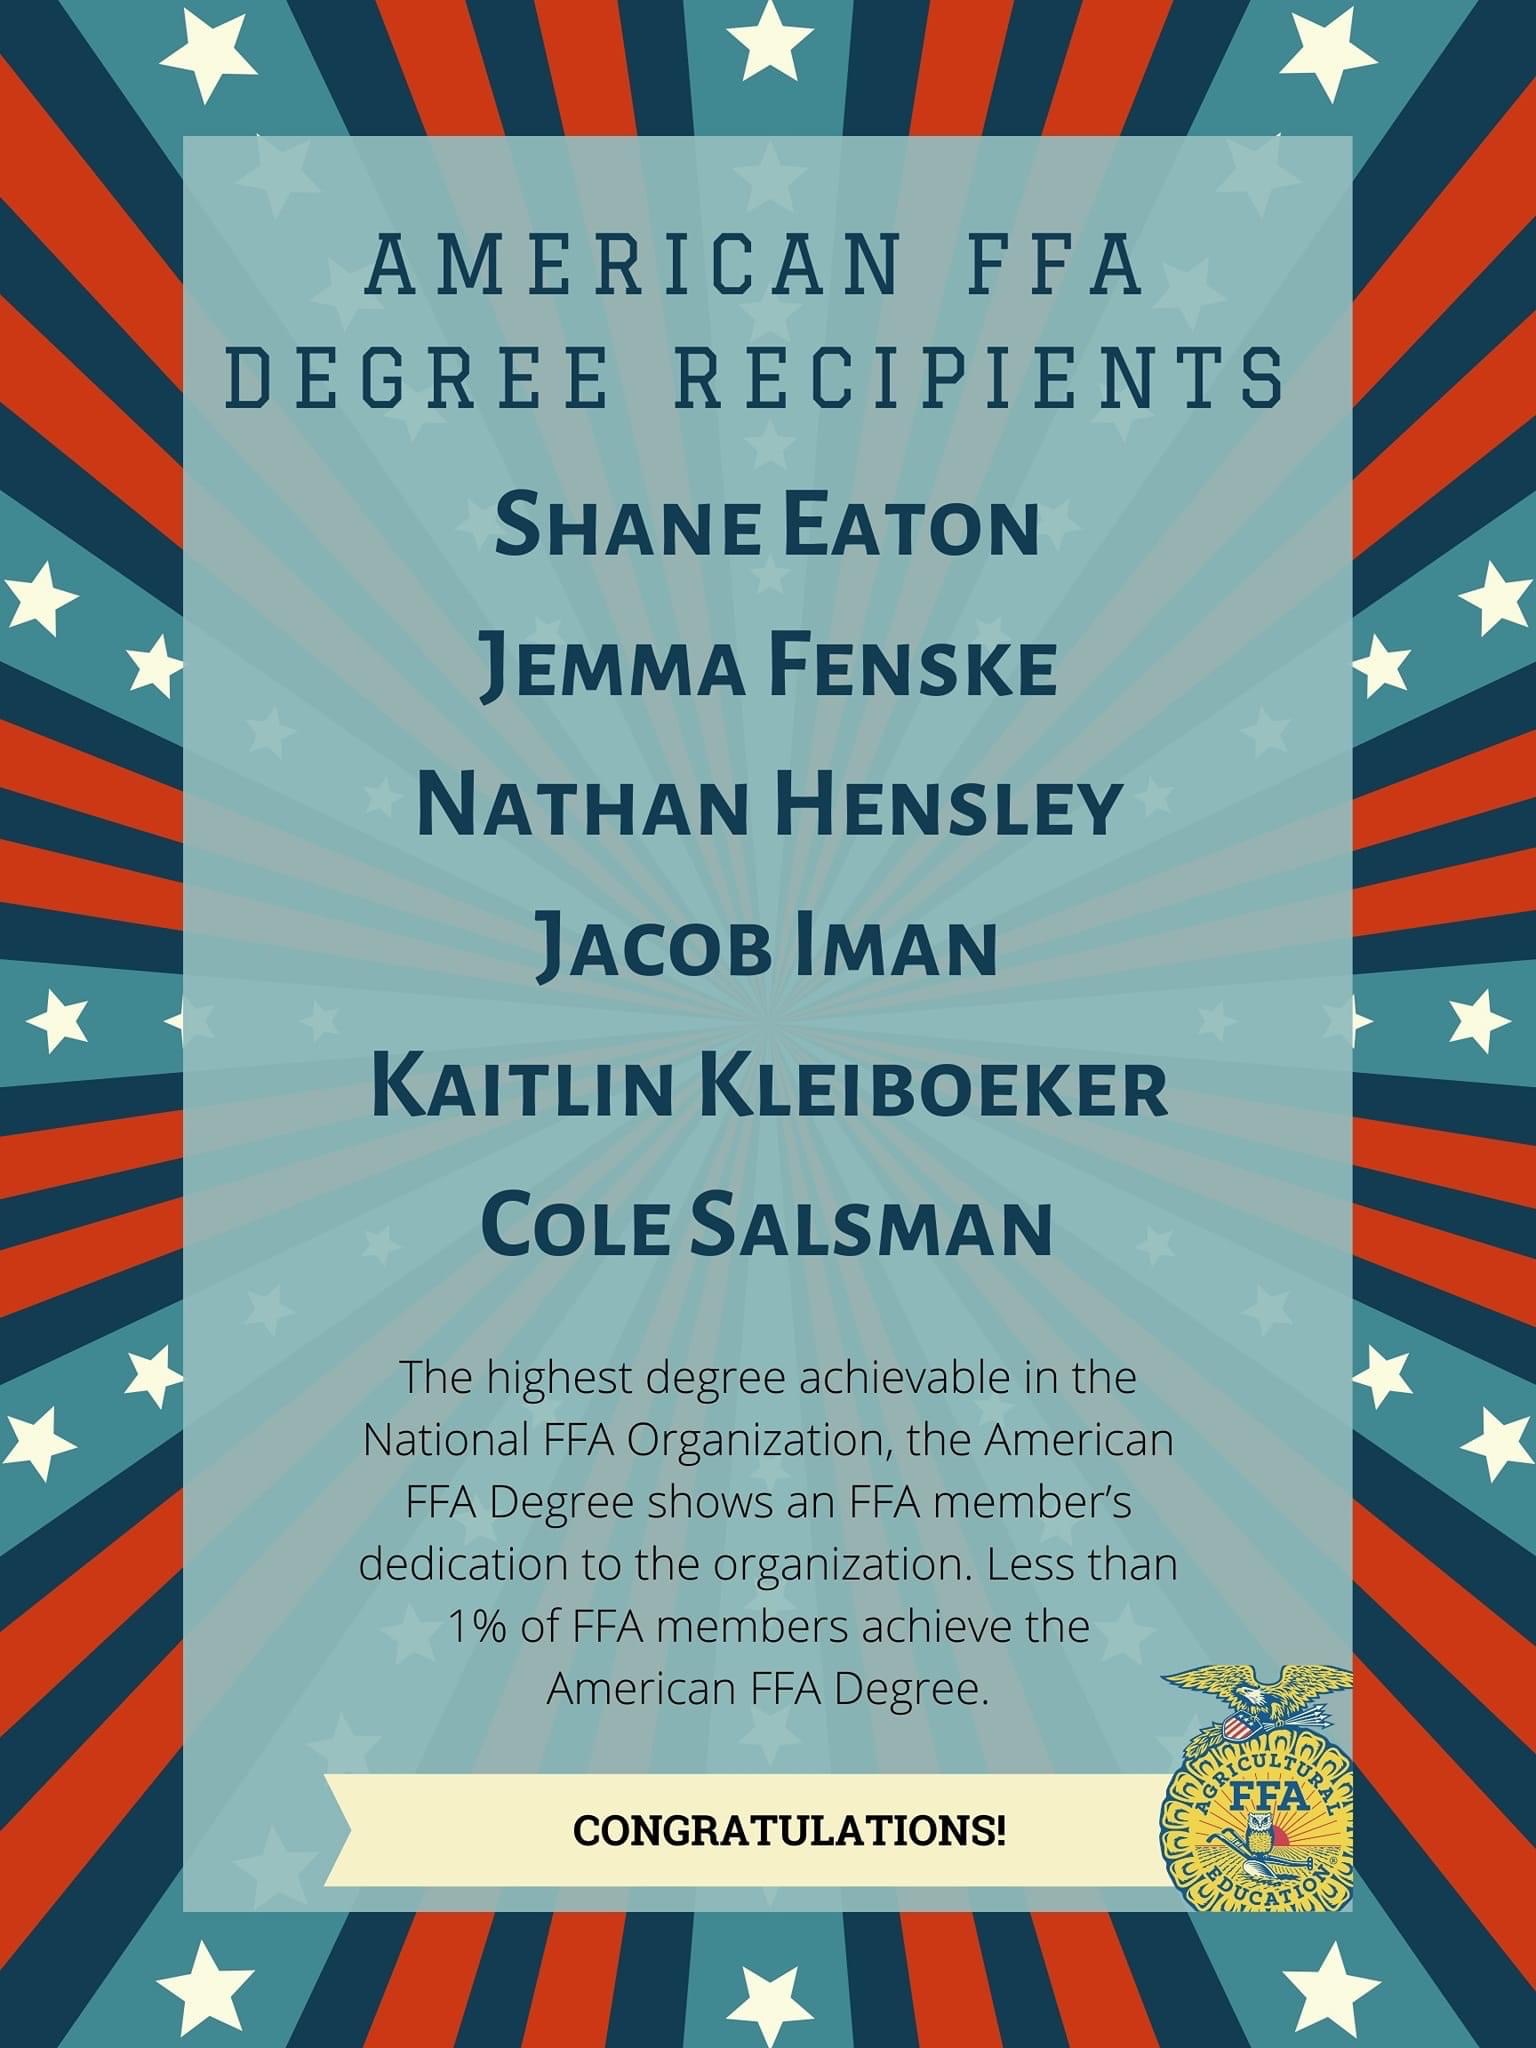 american ffa degree recipients: Shane Eaton, Jemma Fenske, Nathan Hensley, Jacob Iman, Kaitlin Kleiboeker, Cole Salsman